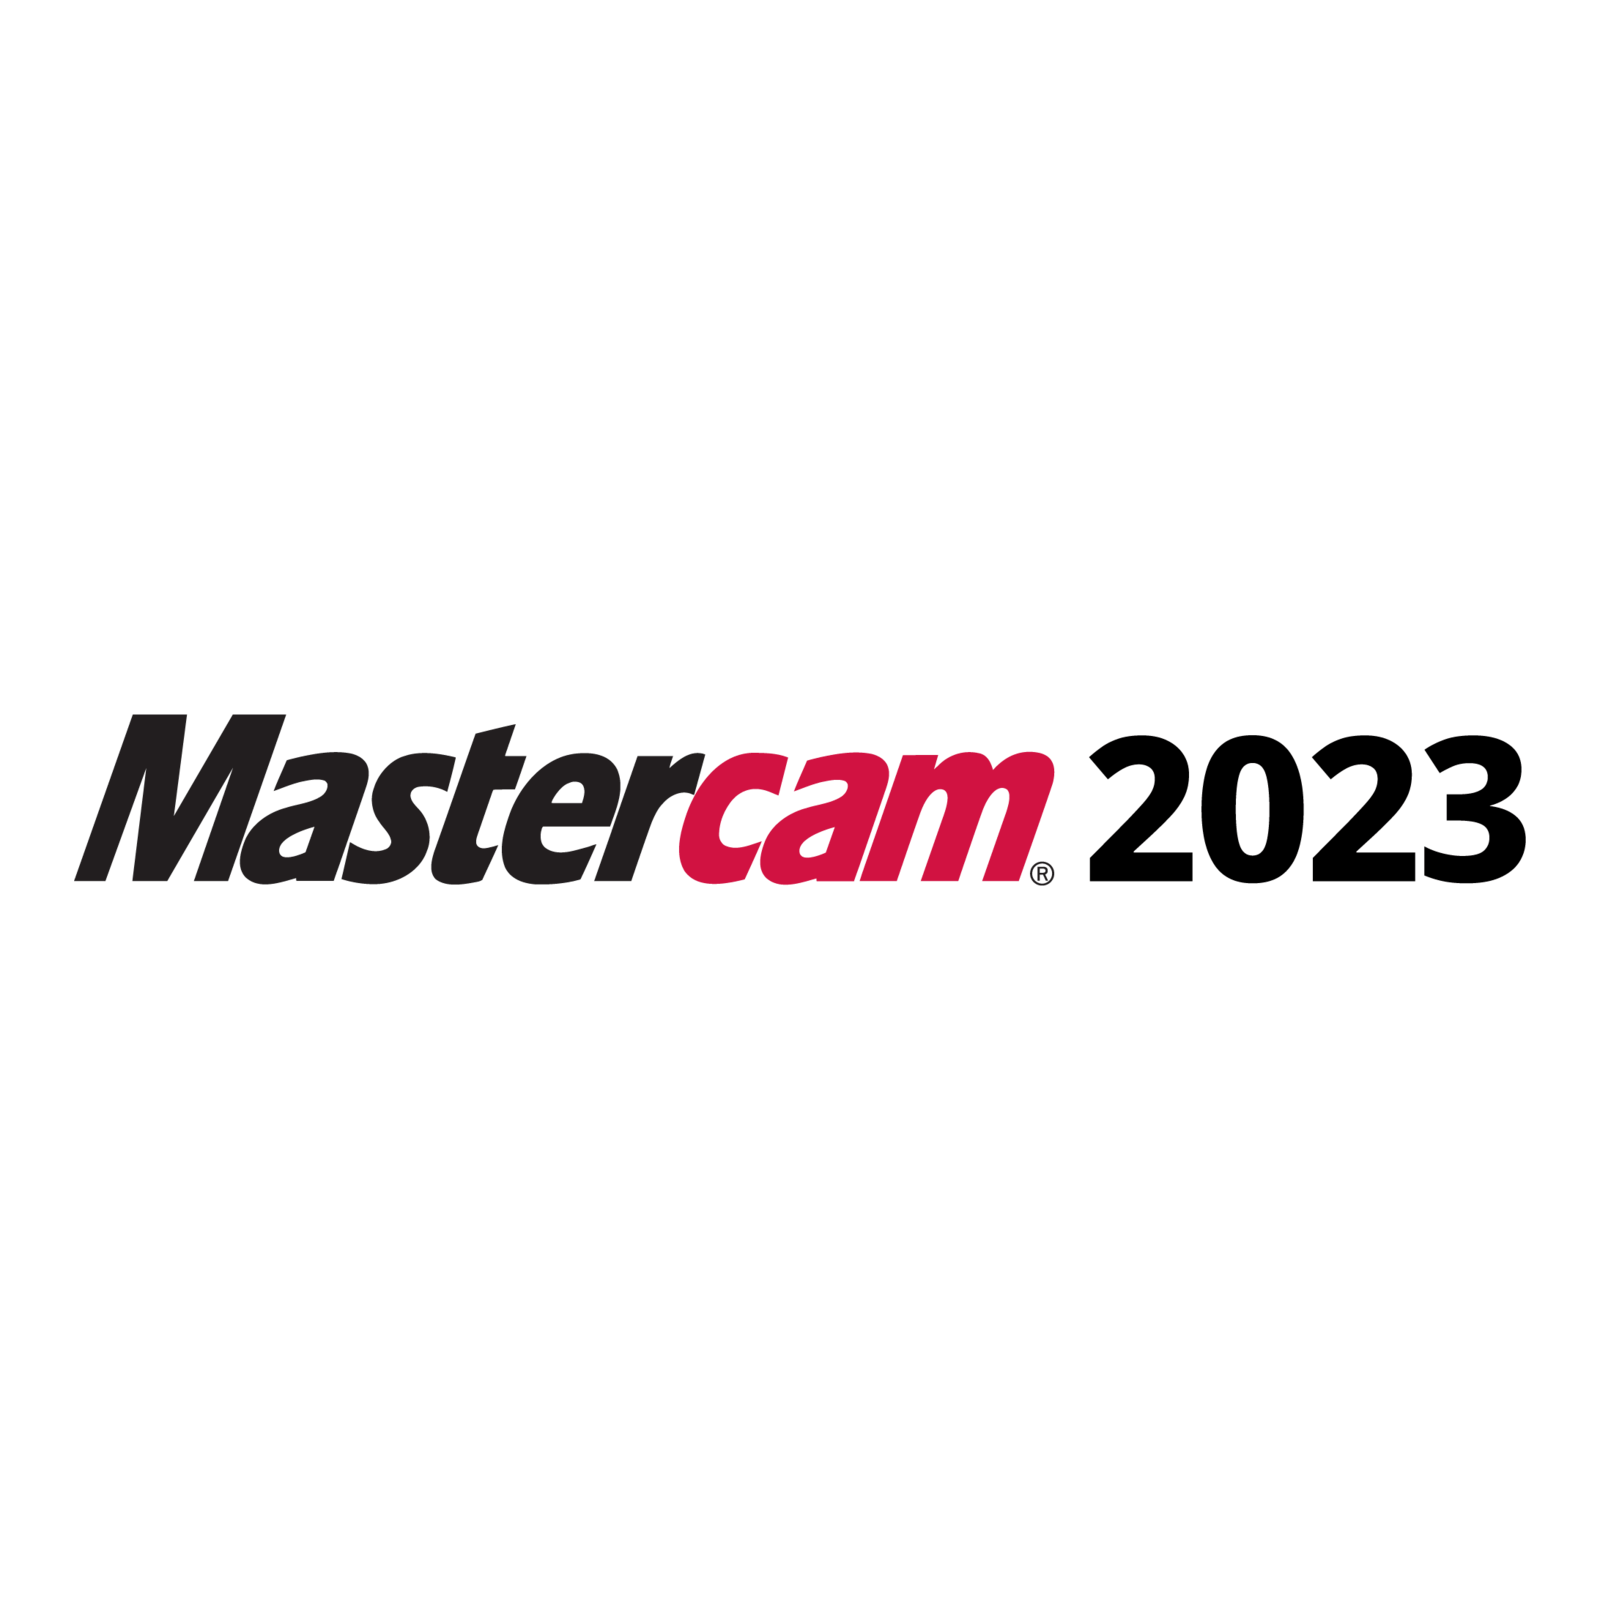 Mastercam 2023 logo